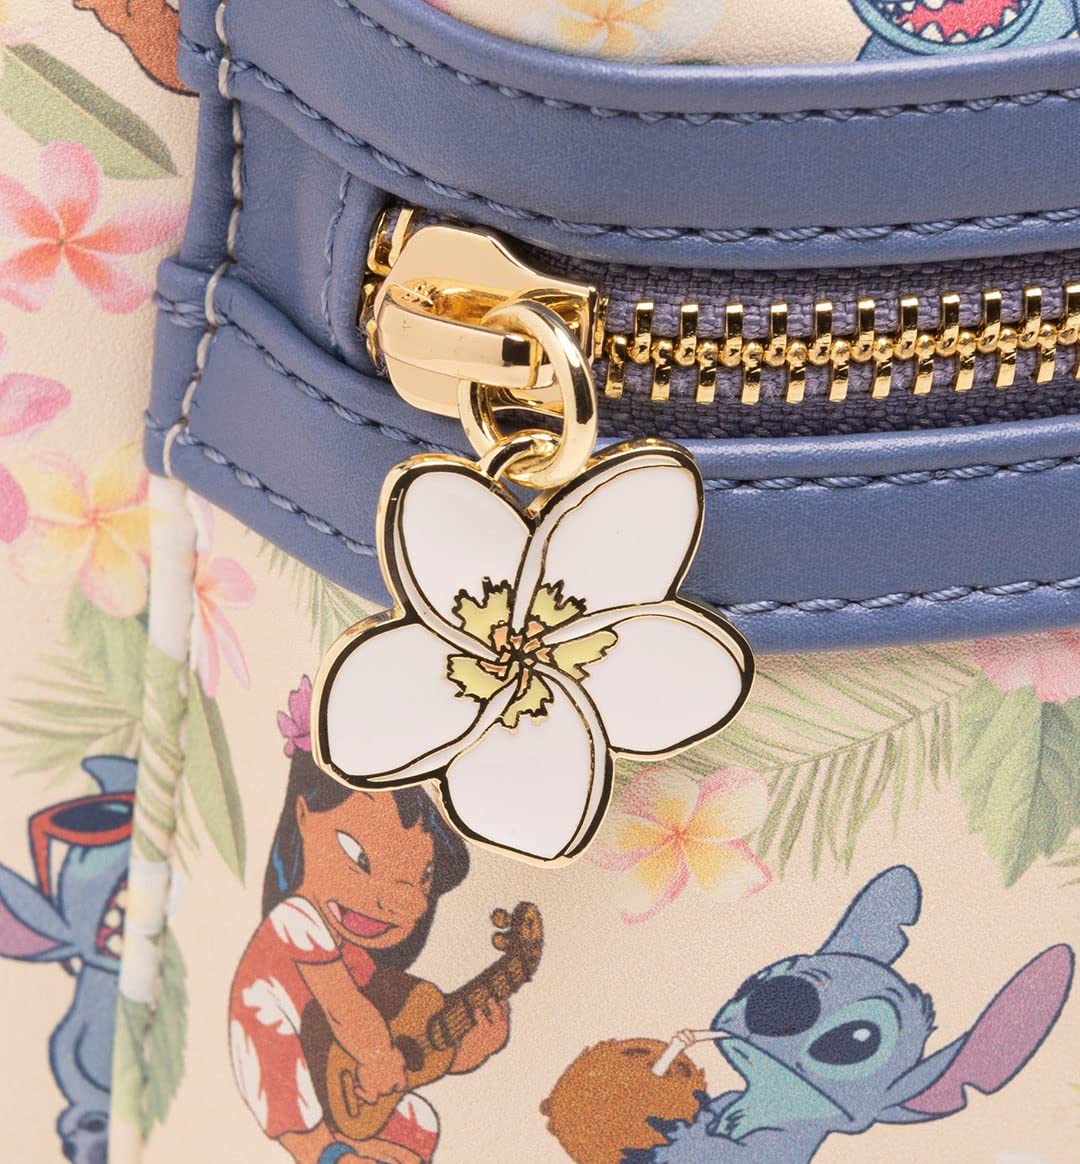 Loungefly Disney Lilo and Stitch Hula Dance Mini Backpack